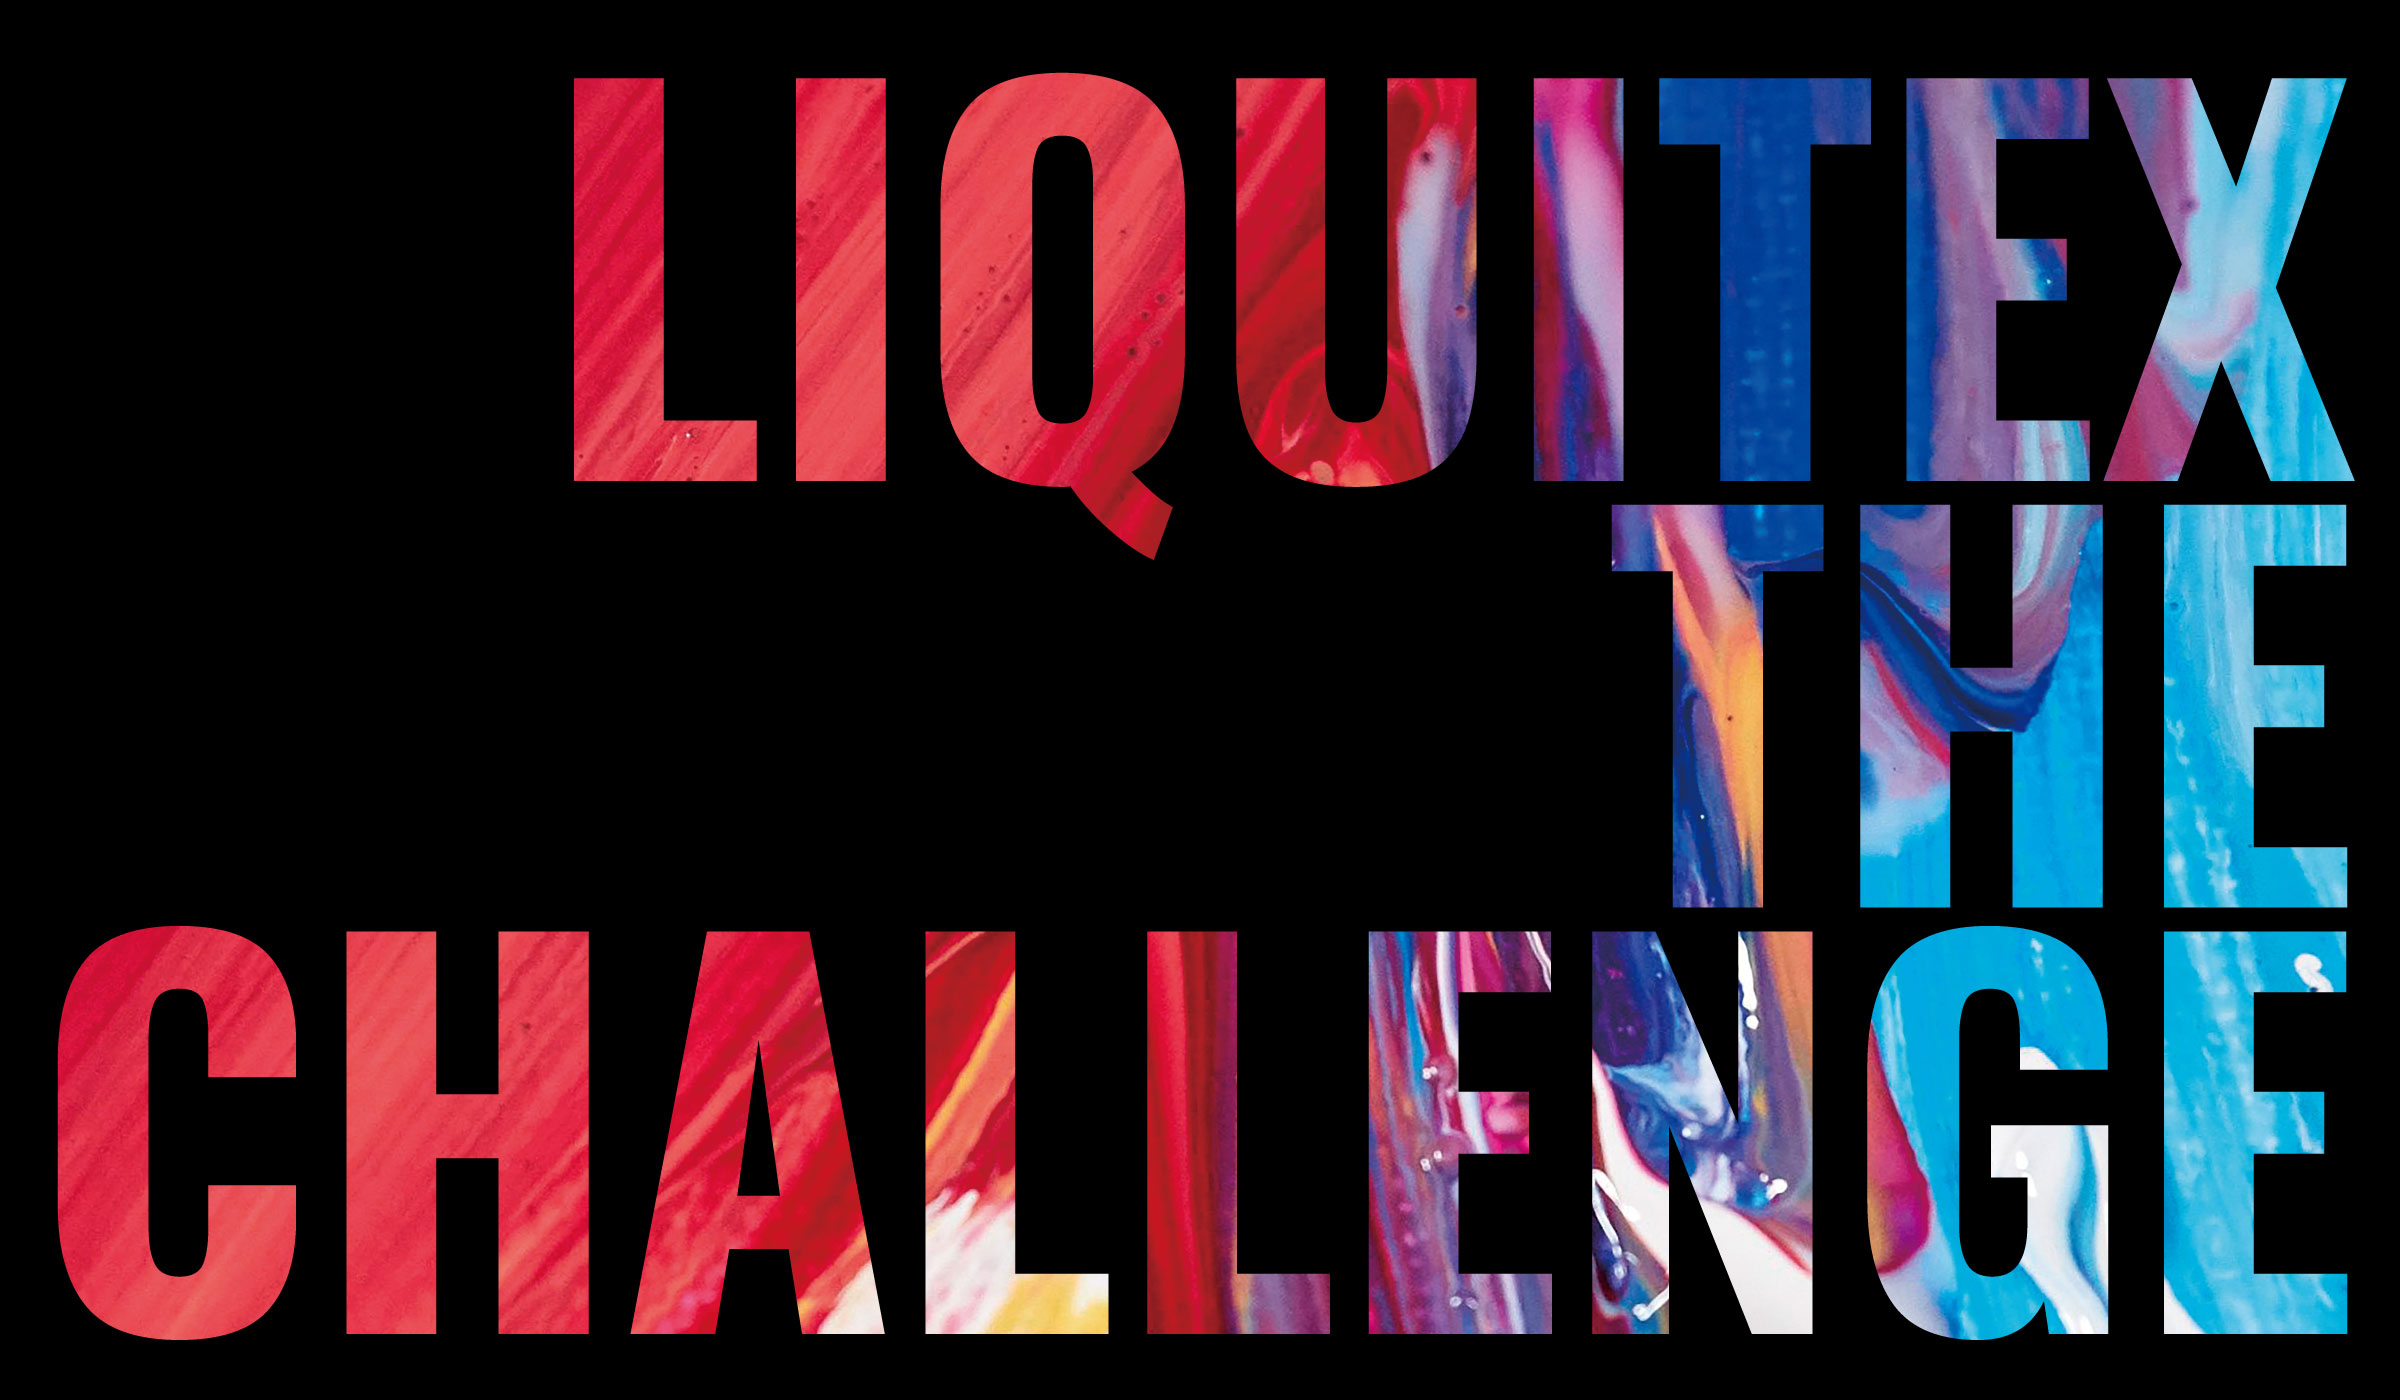 LIQUITEX THE CHALLENGE